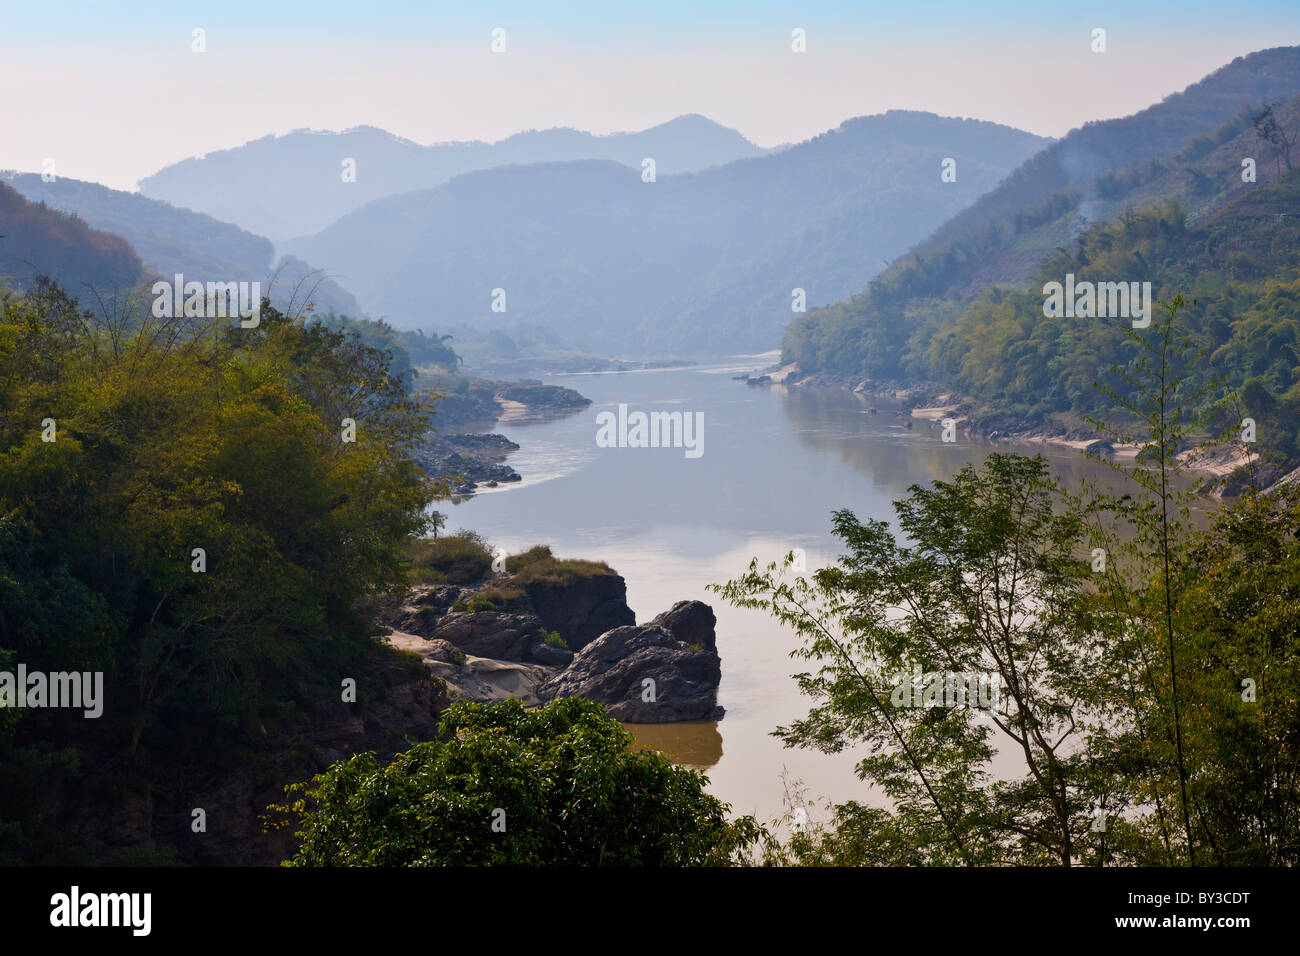 Der Lancang oder Mekong River, in der Nähe von Jinghong, Yunnan Provinz, Xishuangbanna Region, Volksrepublik China. JMH4238 Stockfoto